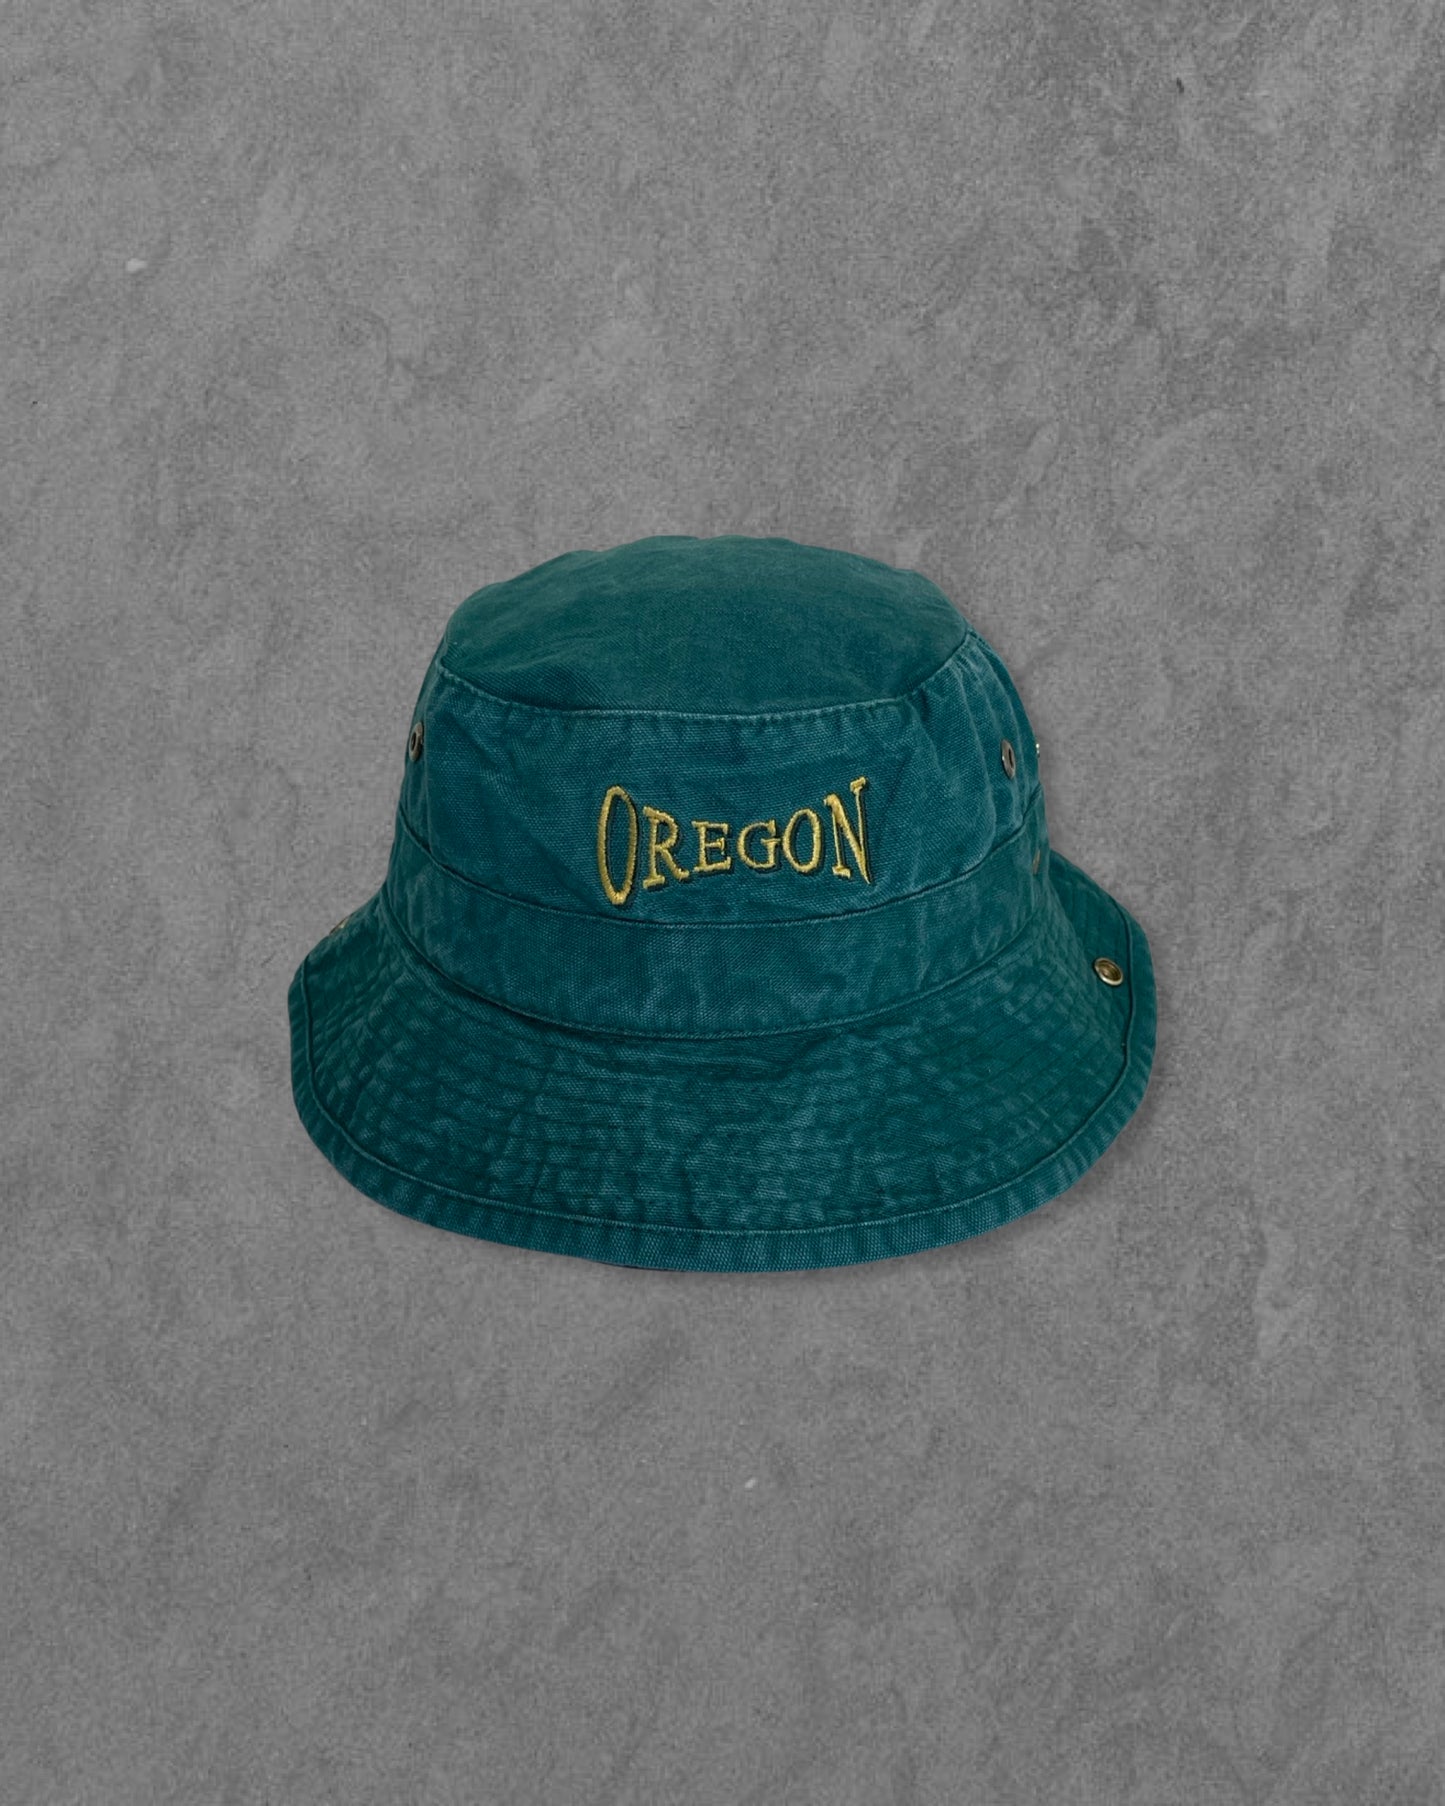 Vintage Oregon Bucket Hat